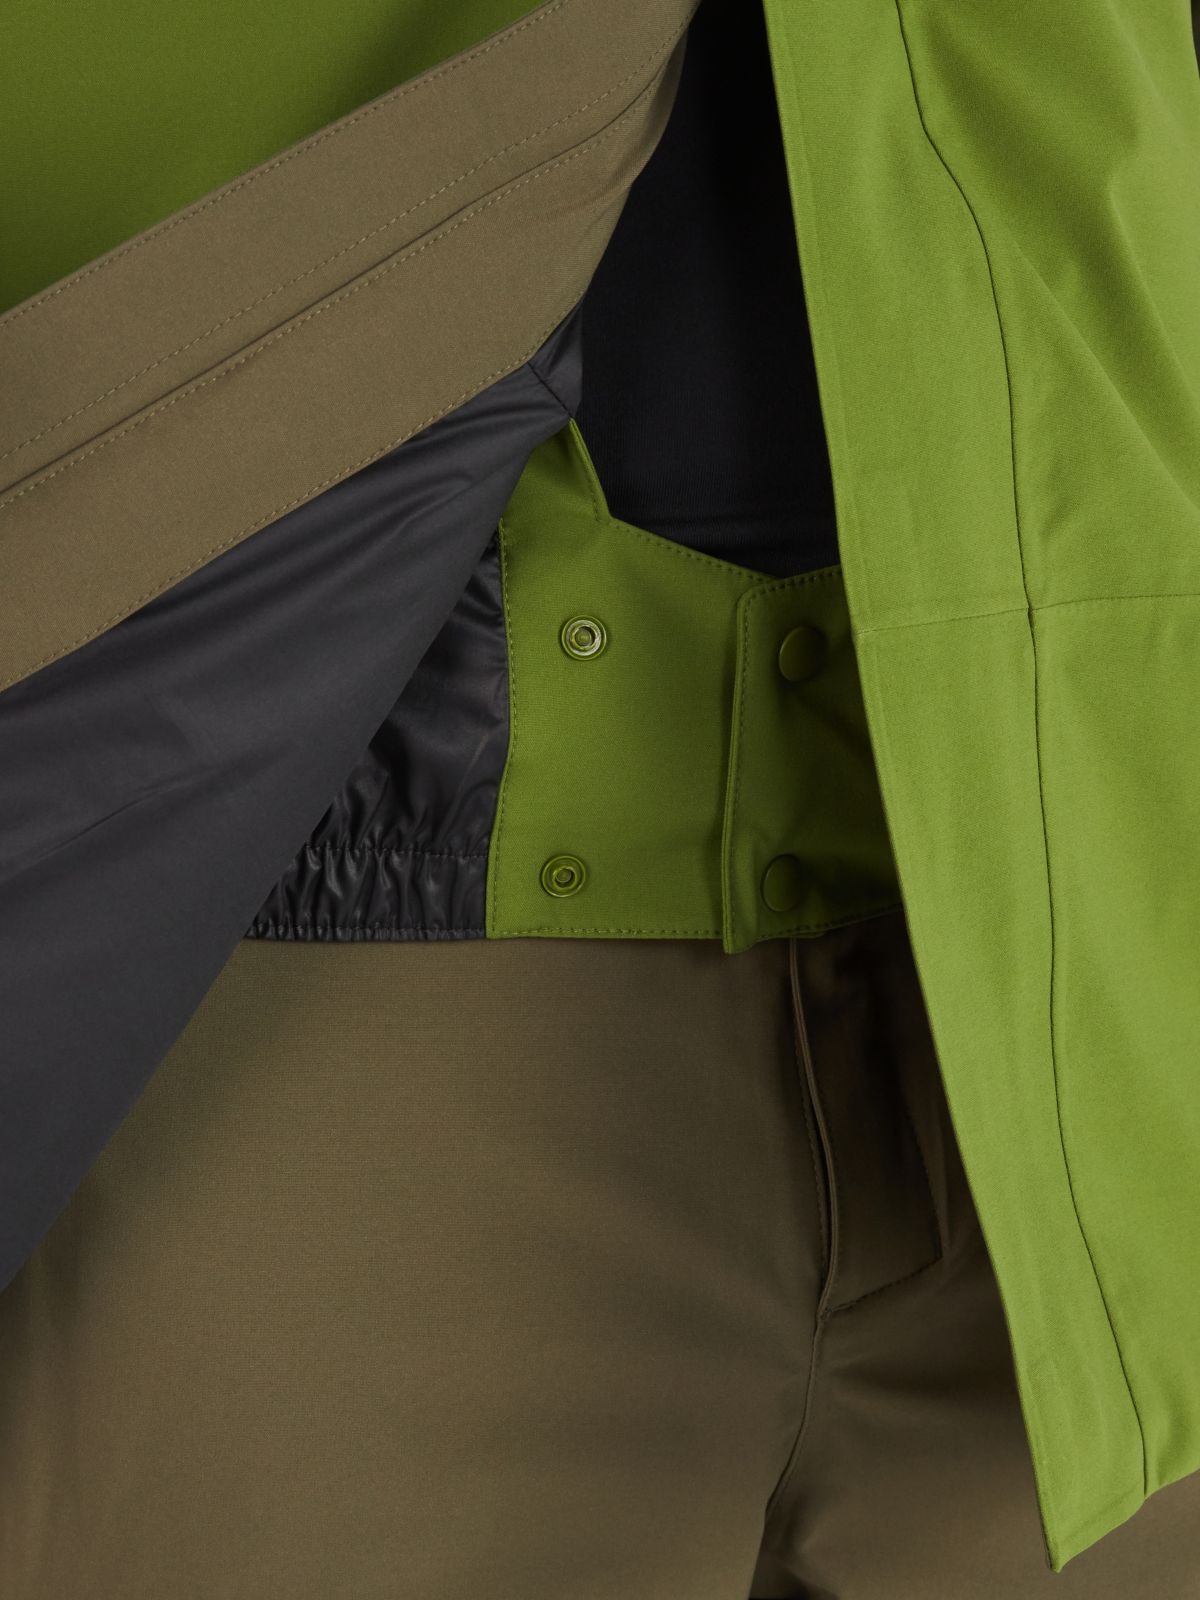 Model displaying inner lining of Marmot men's jacket in lime green